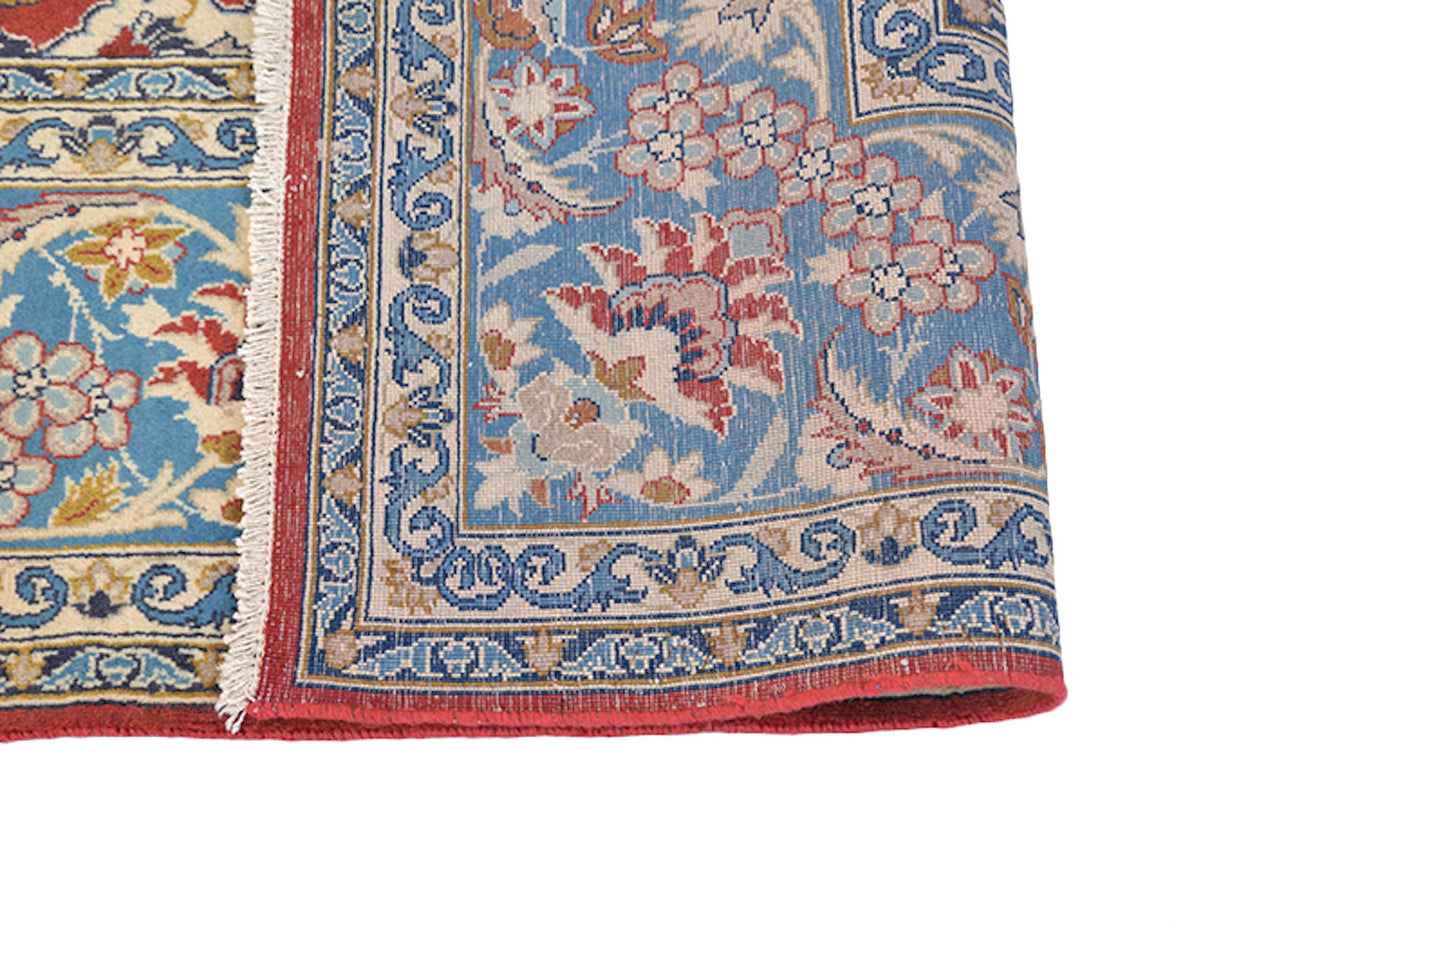 7 x 11 Feet Blue Orange Medallion Rug | Handmade Area Rug | Oriental Persian Caucasian Rug | Rustic Colored Rug | Wool Tribal Vintage